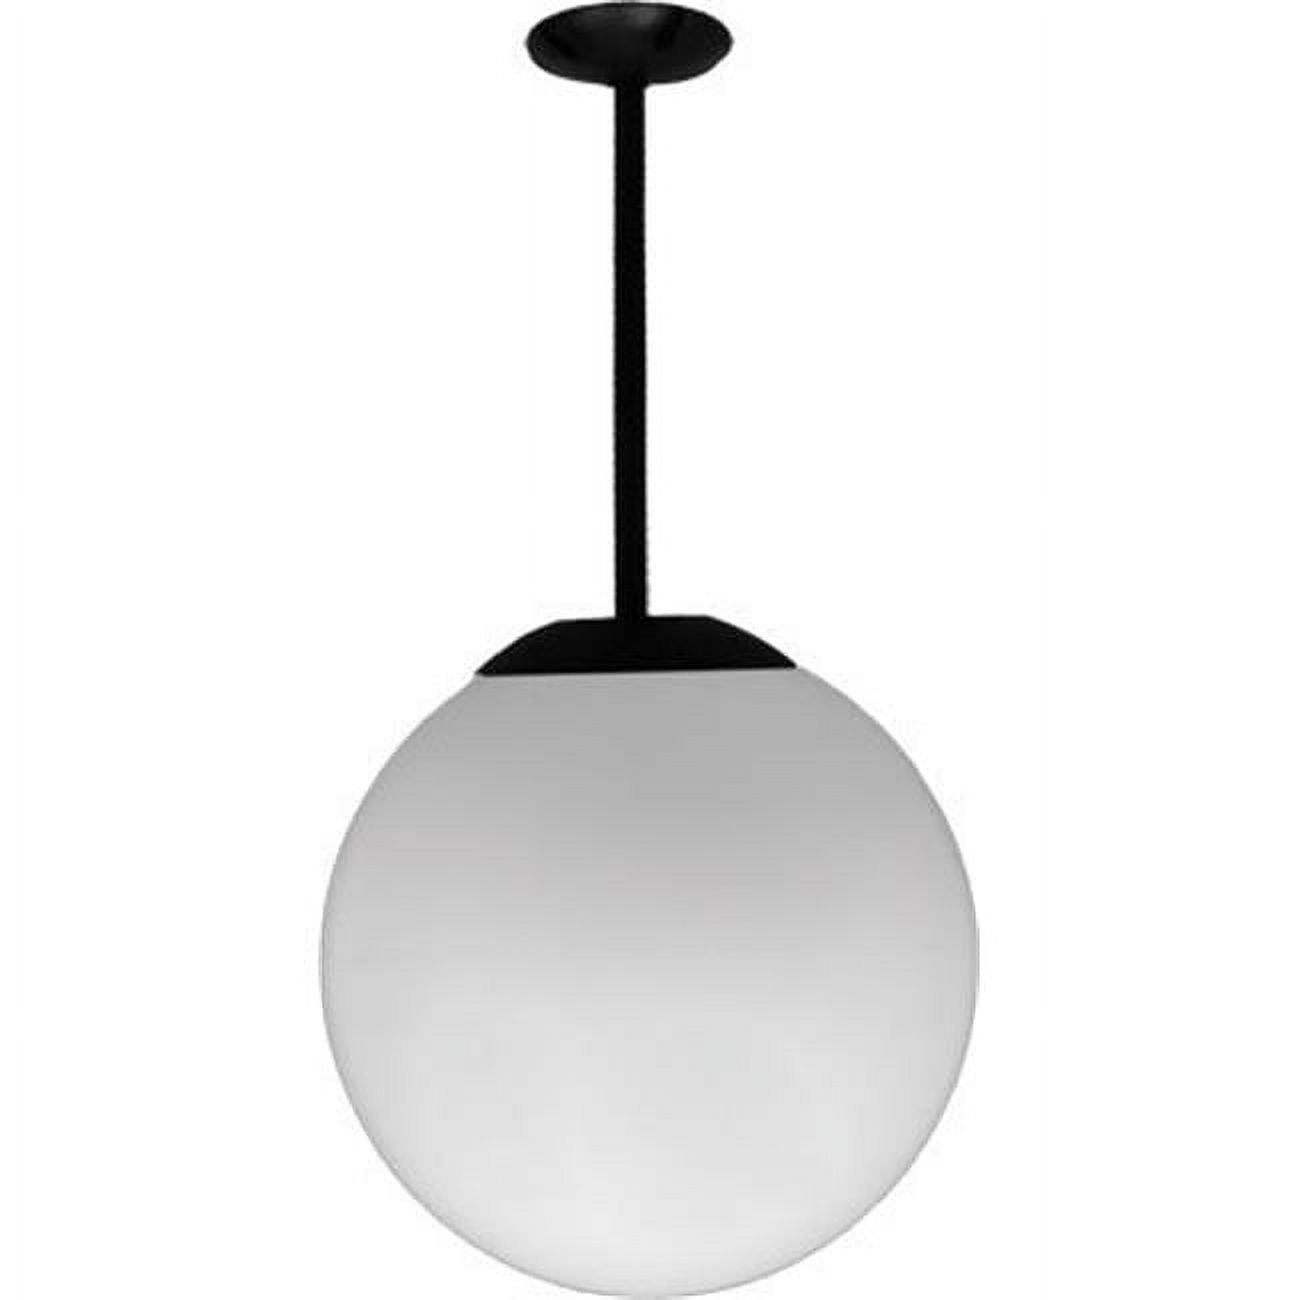 D7518-12-b 18 In. 120 V 70 Watts Ceiling Globe Fixture 12 In. Drop With Metal Halide Lamp, Black